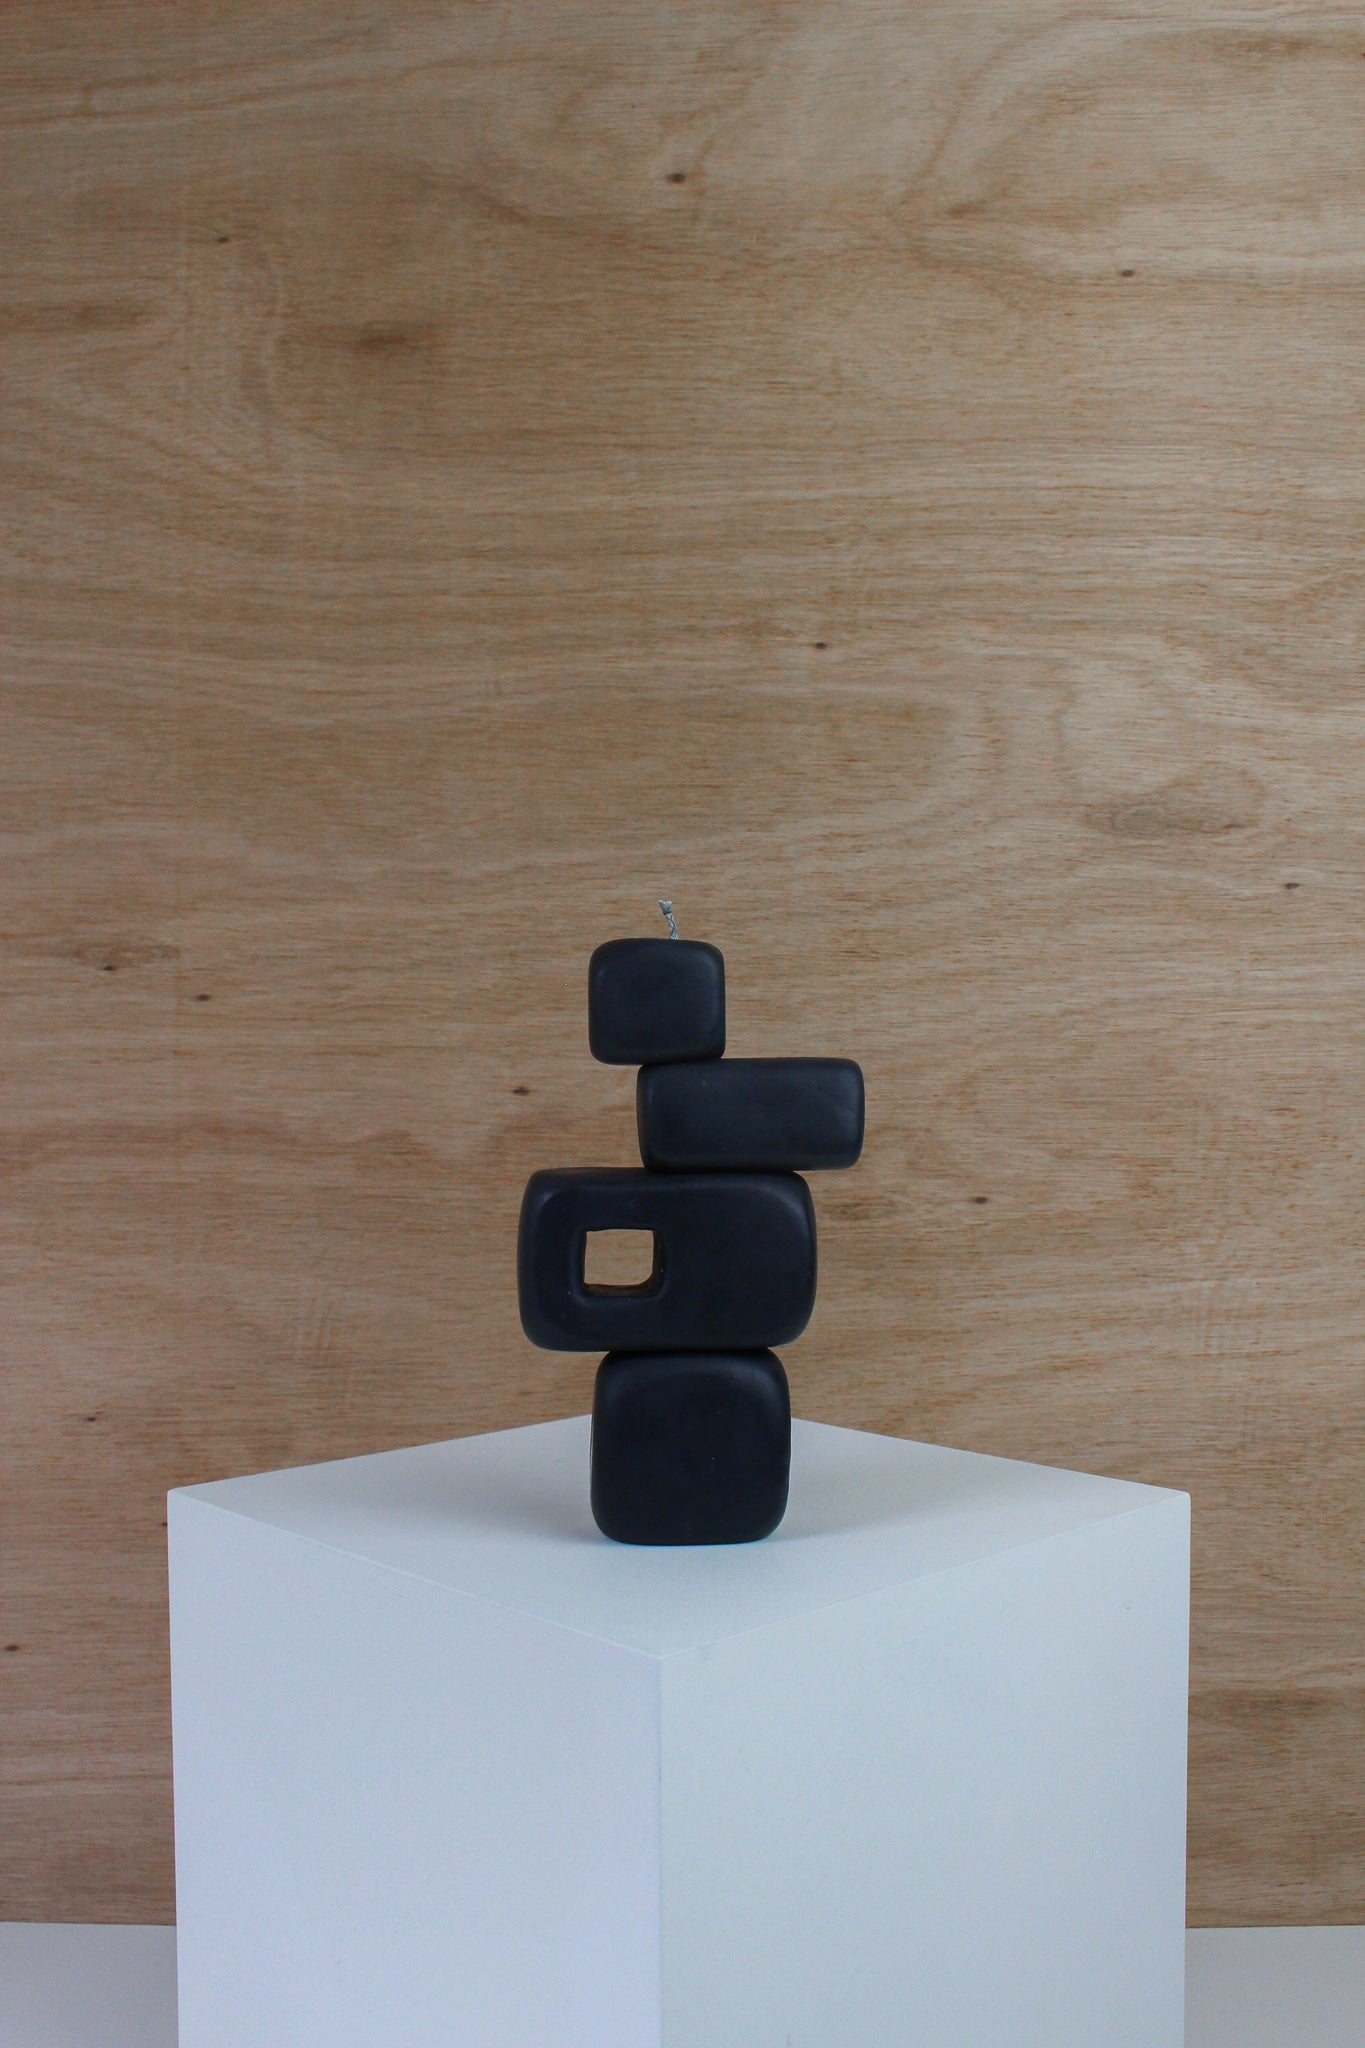 Cubed Sculptural Candle